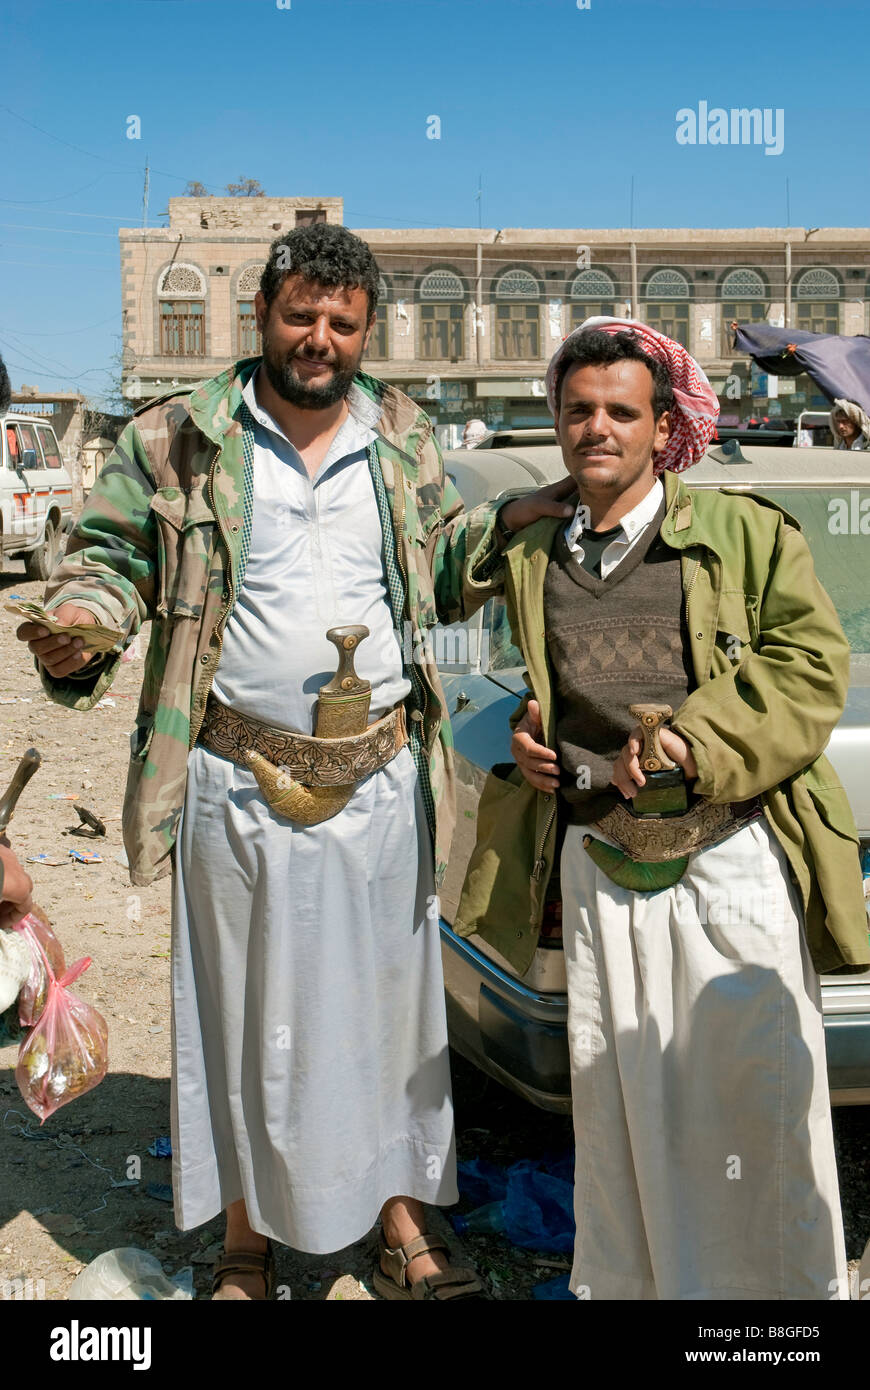 Khat qat ghat i concessionari venditori sul mercato stupefacenti yemen Foto Stock